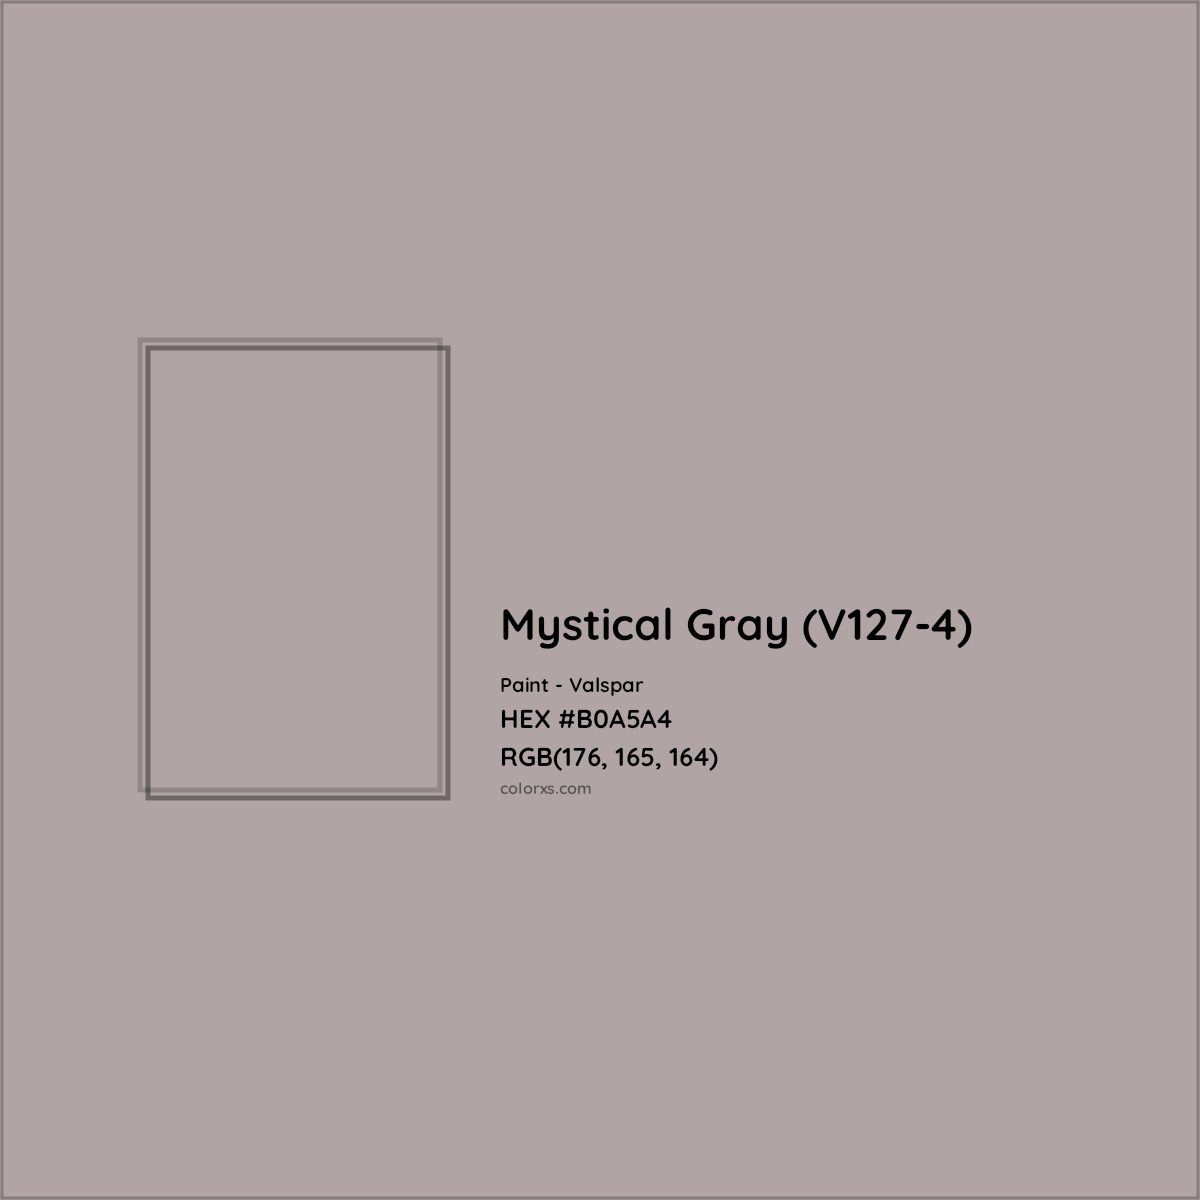 HEX #B0A5A4 Mystical Gray (V127-4) Paint Valspar - Color Code